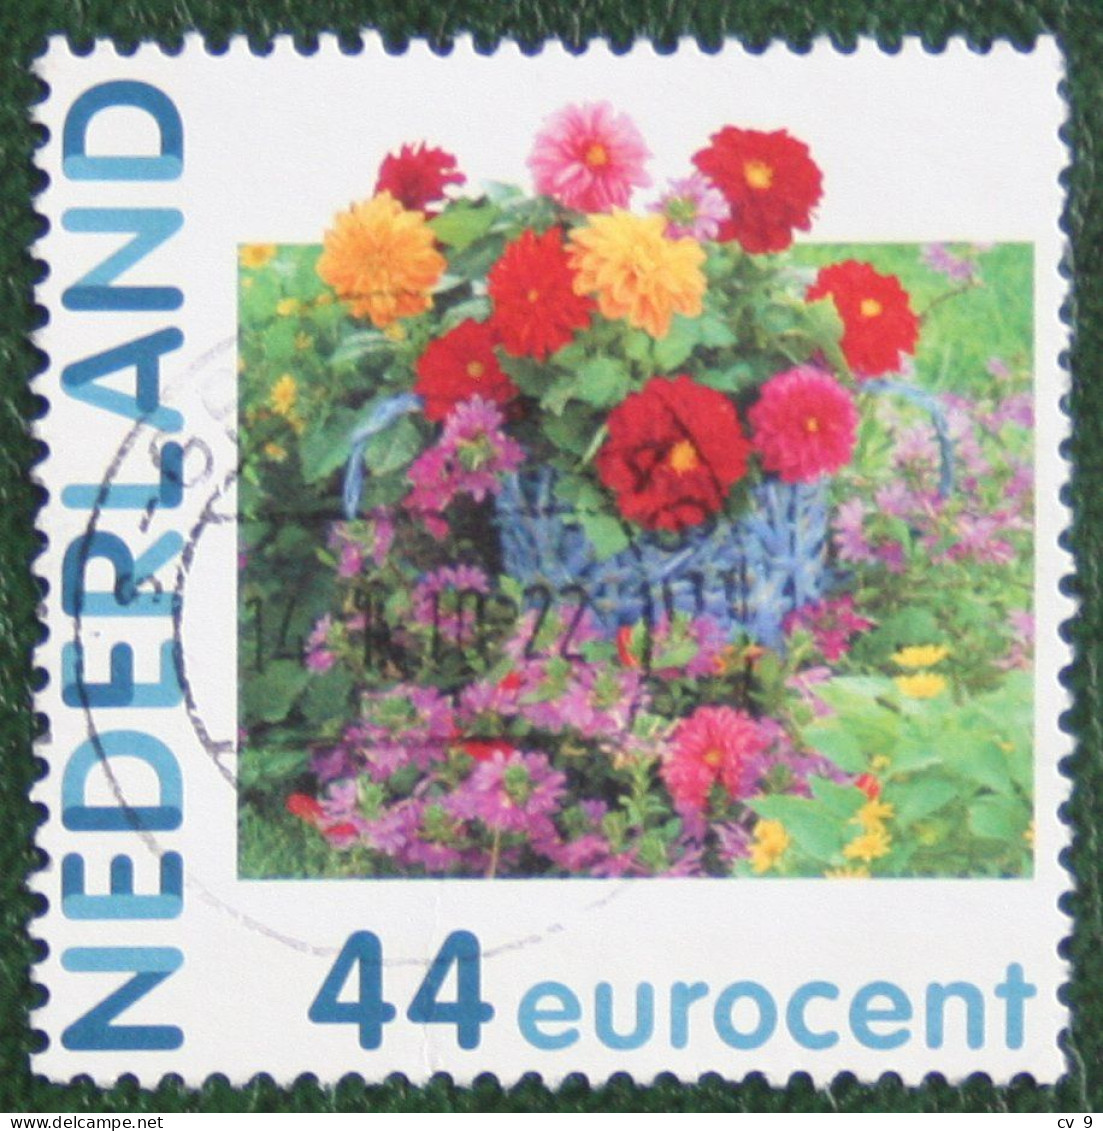 HALLMARK Flower Fleur Blumen Persoonlijke Zegel NVPH 2682 Gestempeld / USED / Oblitere NEDERLAND / NIEDERLANDE - Personnalized Stamps